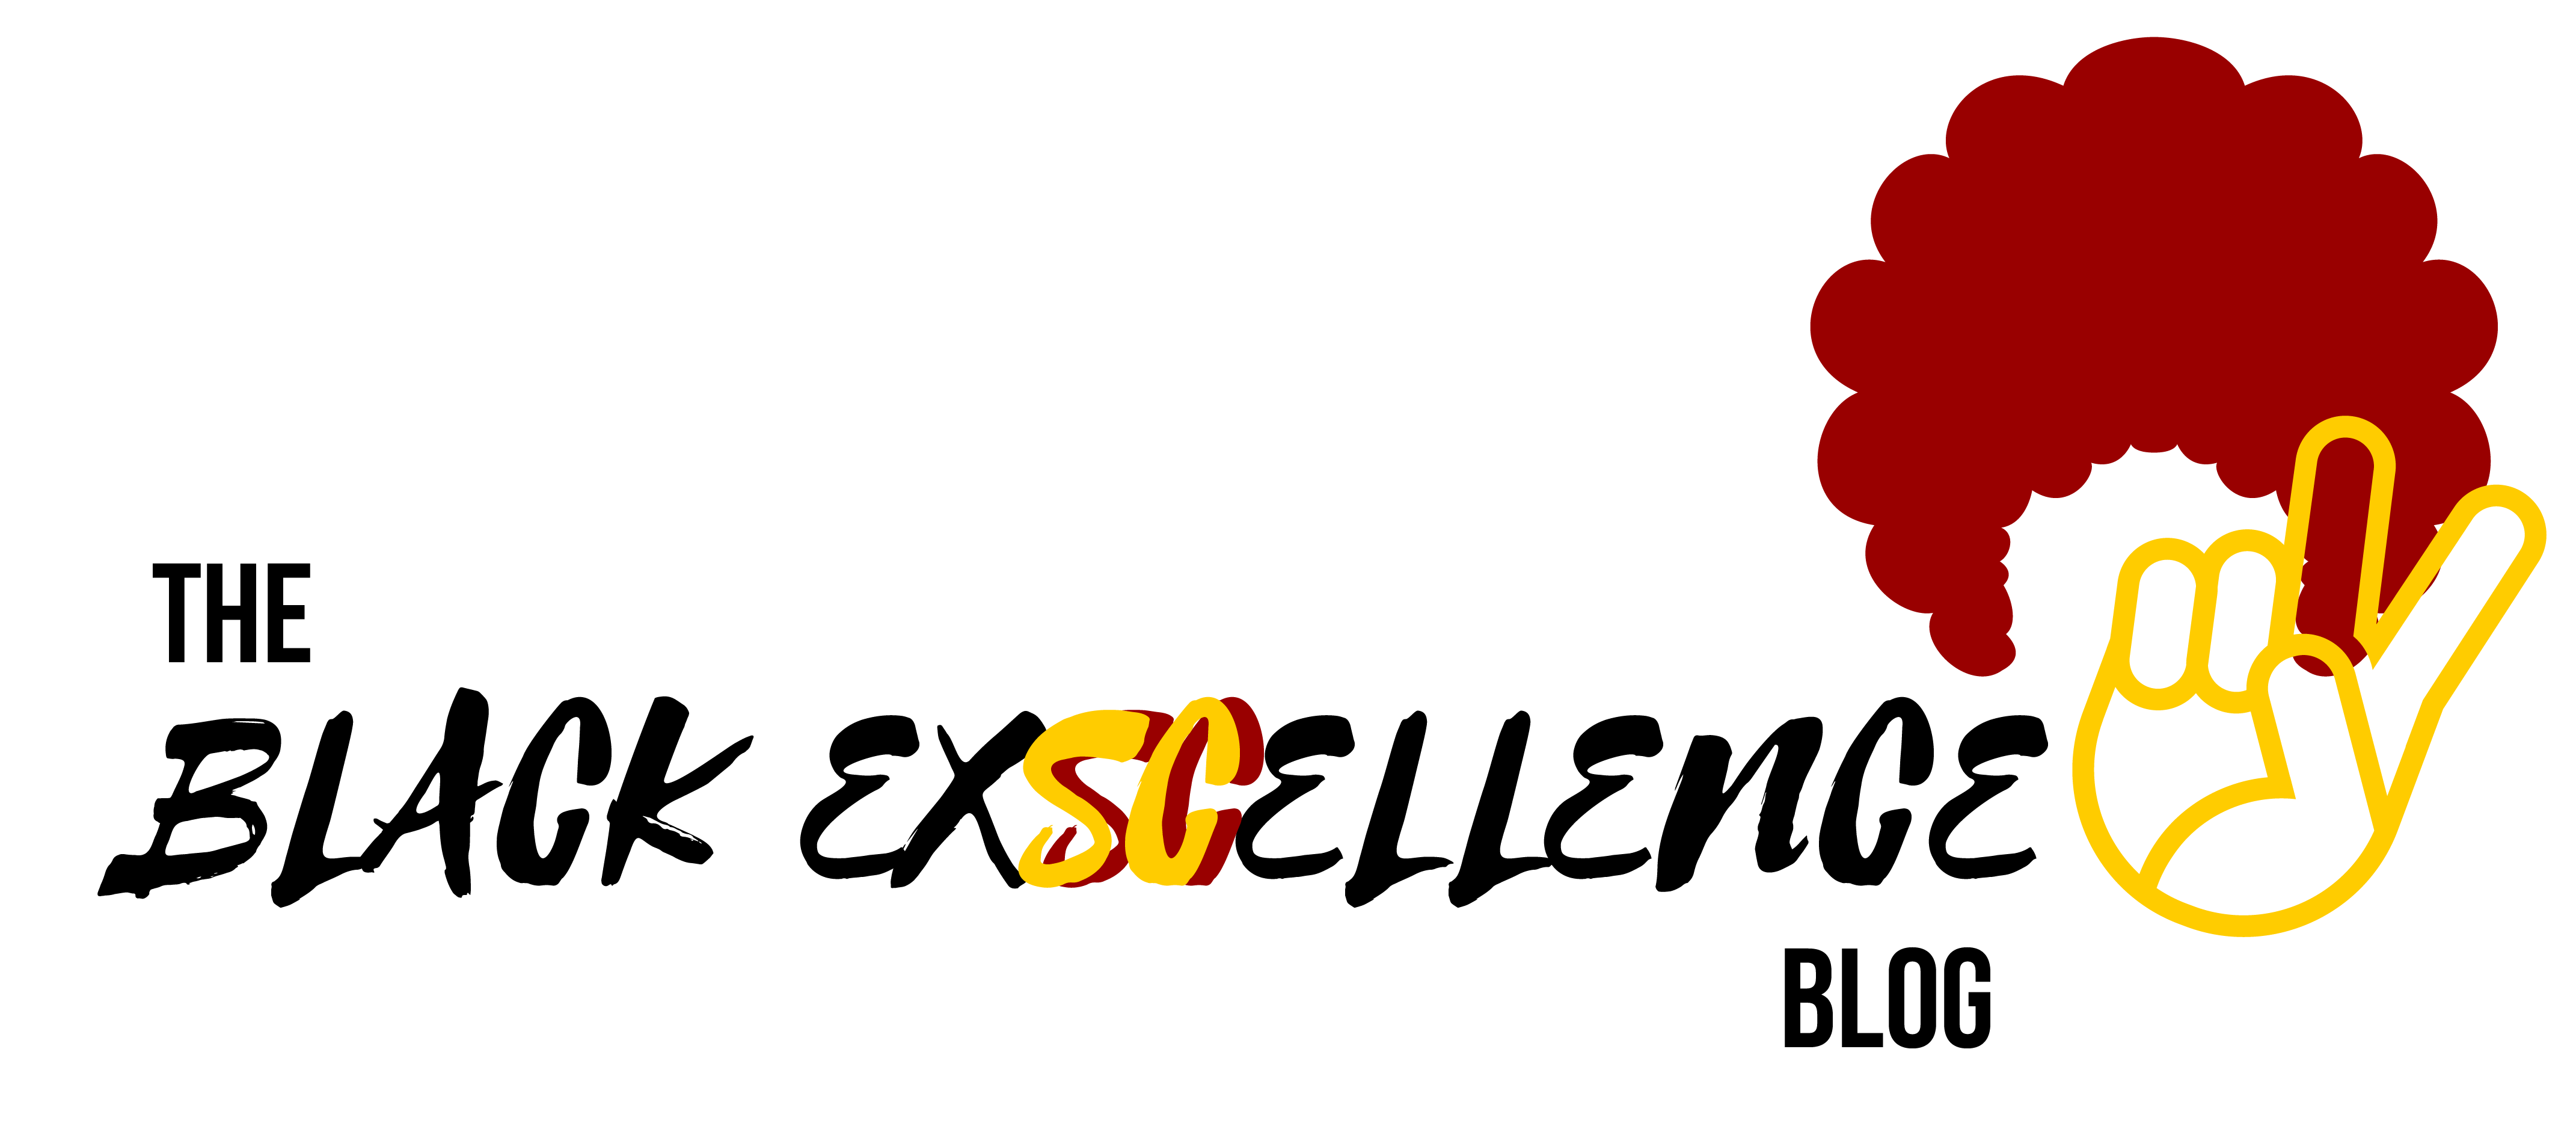 The Black ExSCellence Blog